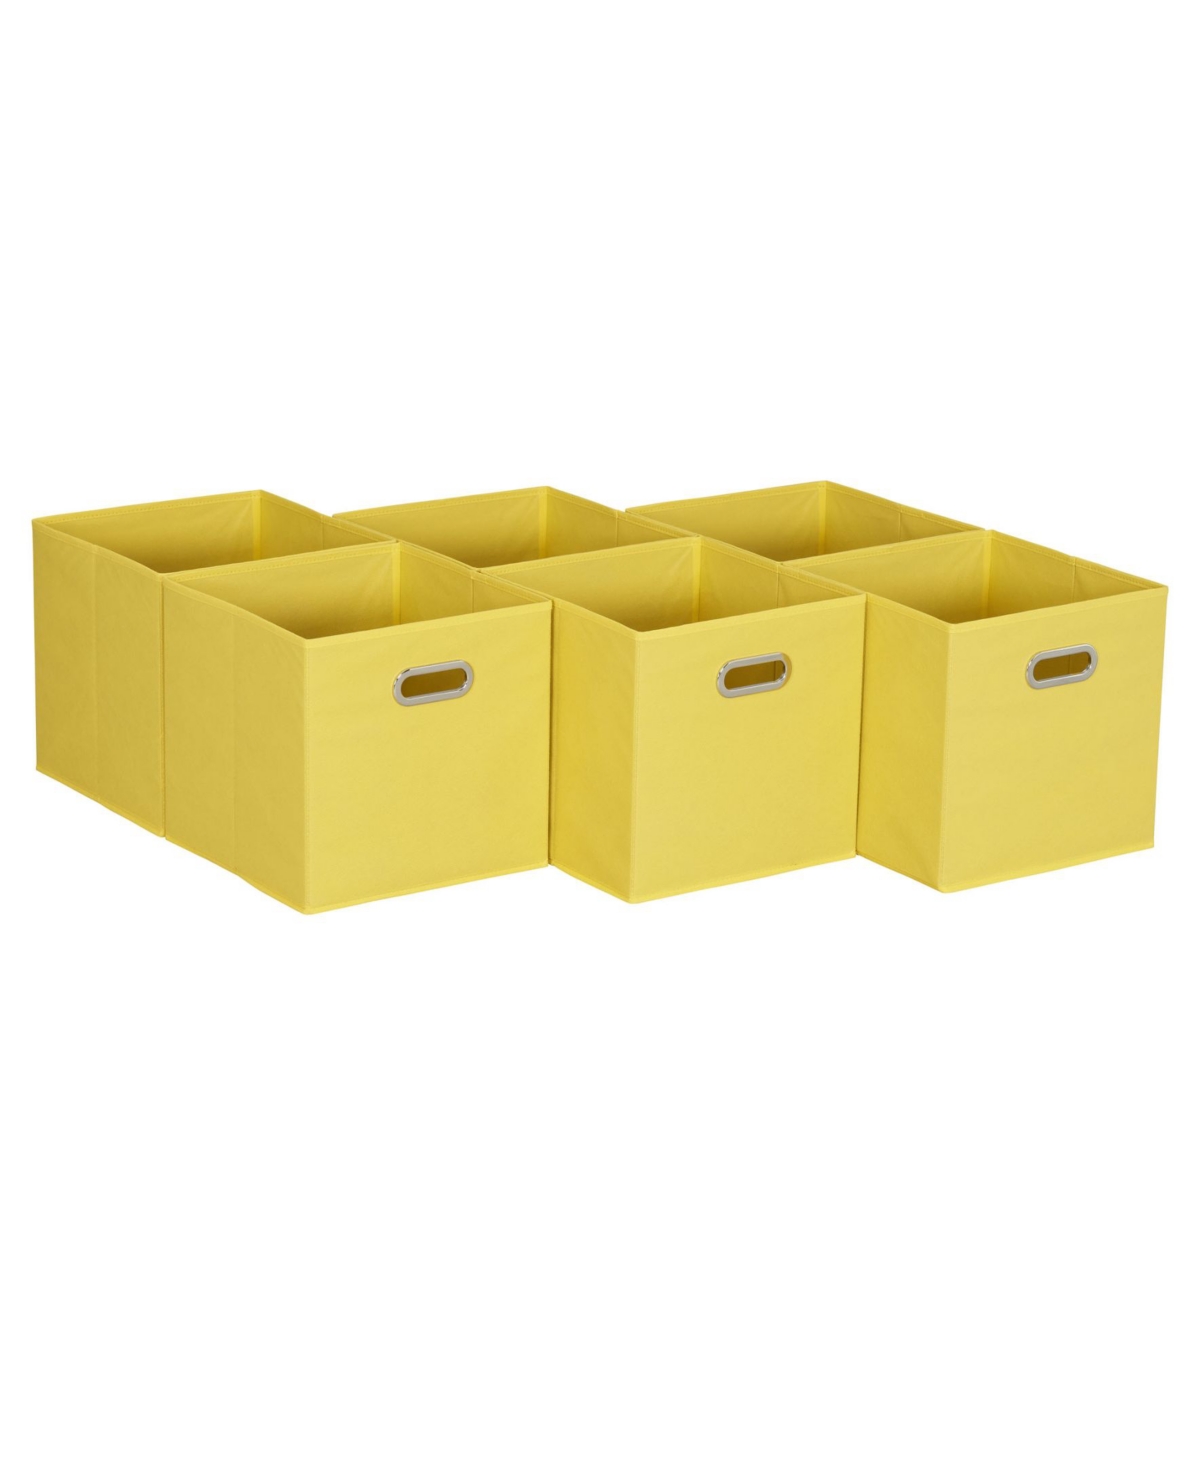 Fabric Cube Storage Bins Set, 6 Piece - Bright Yellow